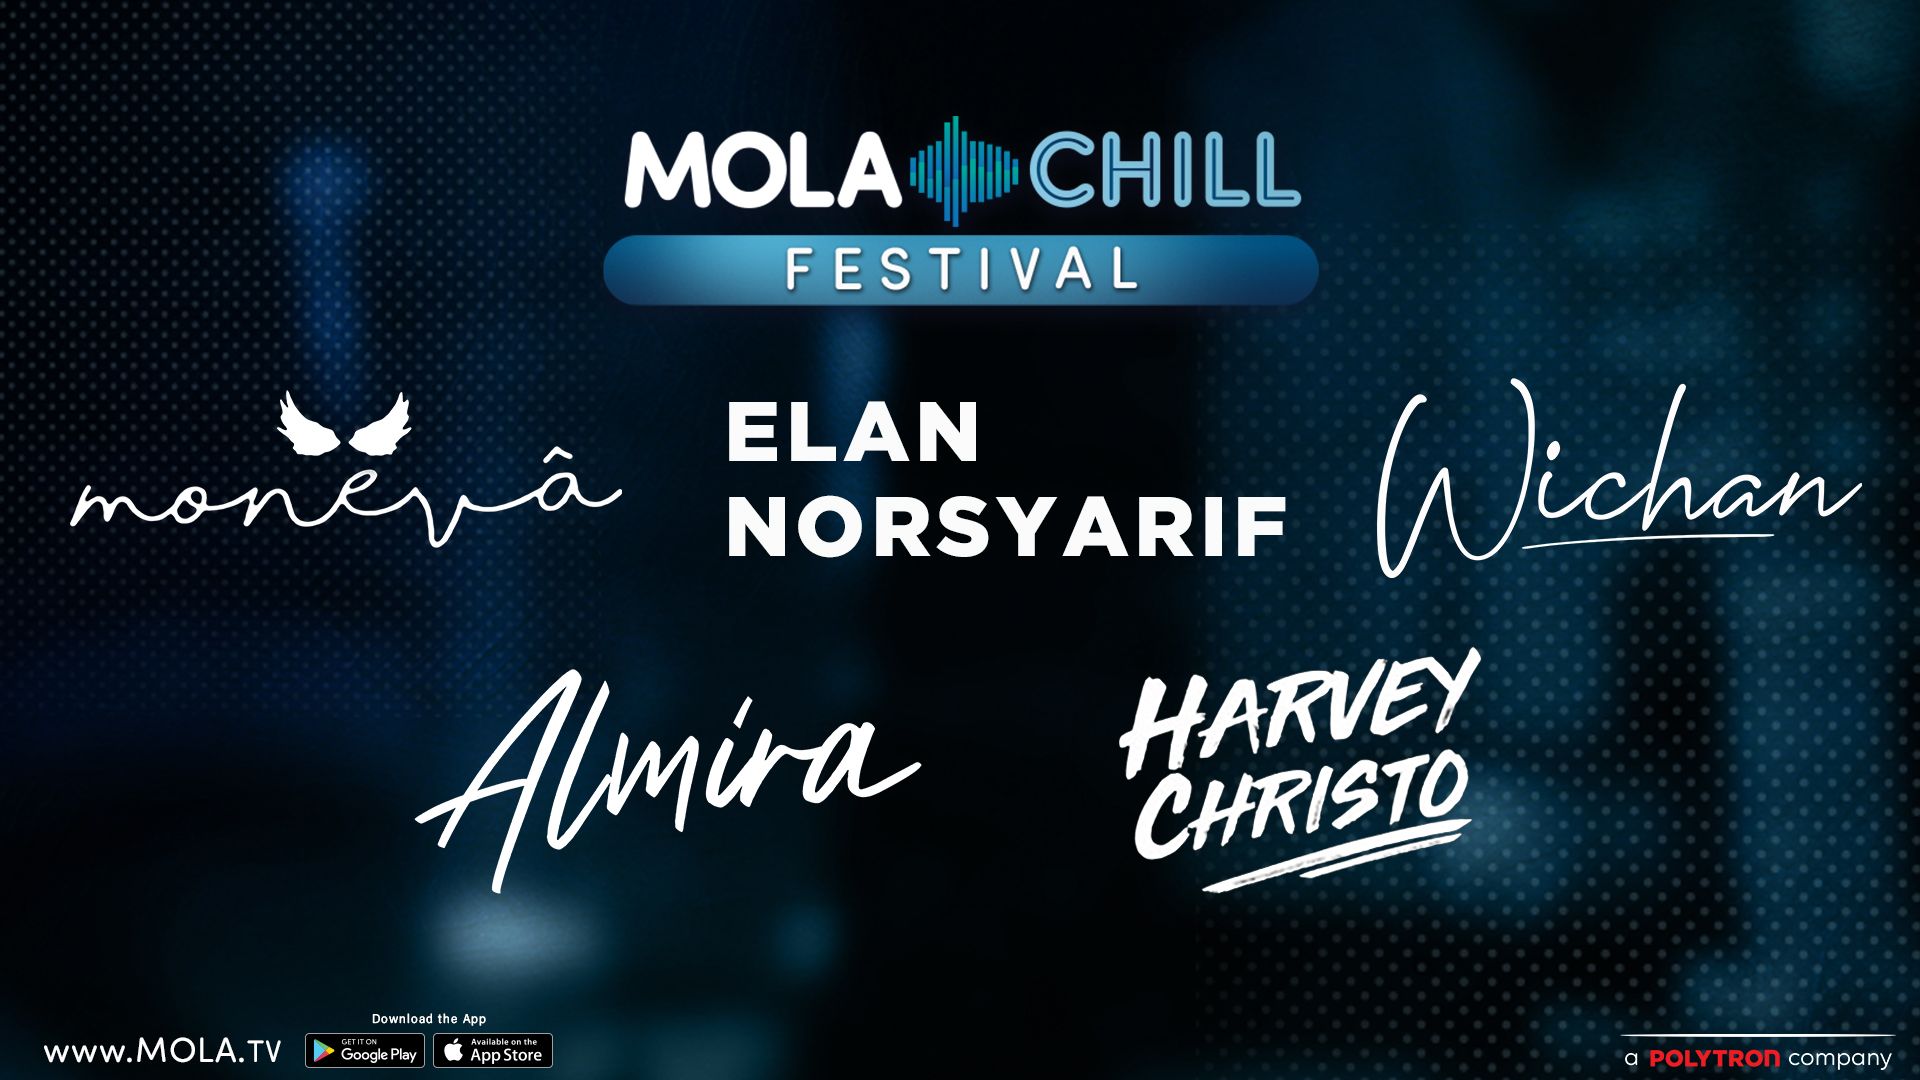 MOLA CHILL FESTIVAL - MONEVA, ELAN NORSYARIF, WICHAN, ALMIRA, HARVEY CHRISTO